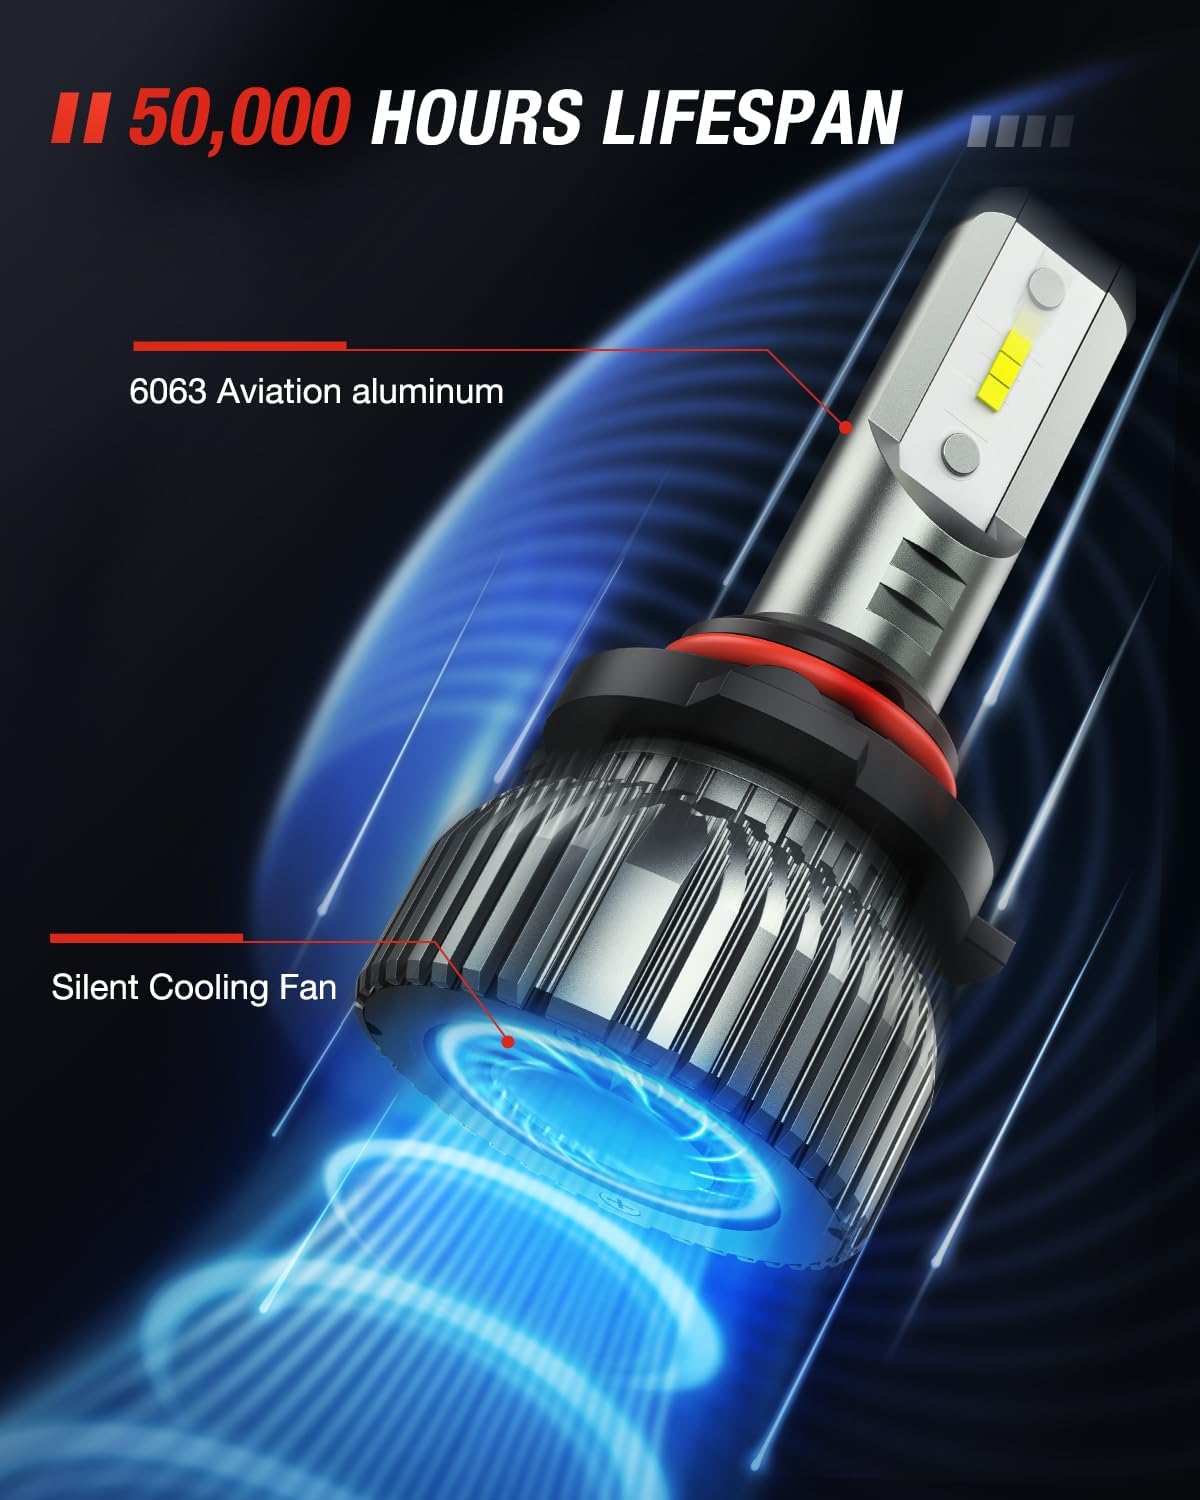 2016-2022 Honda Civic 9005 H11 LED Headlight Fog Light Bulbs 6Packs Nilight